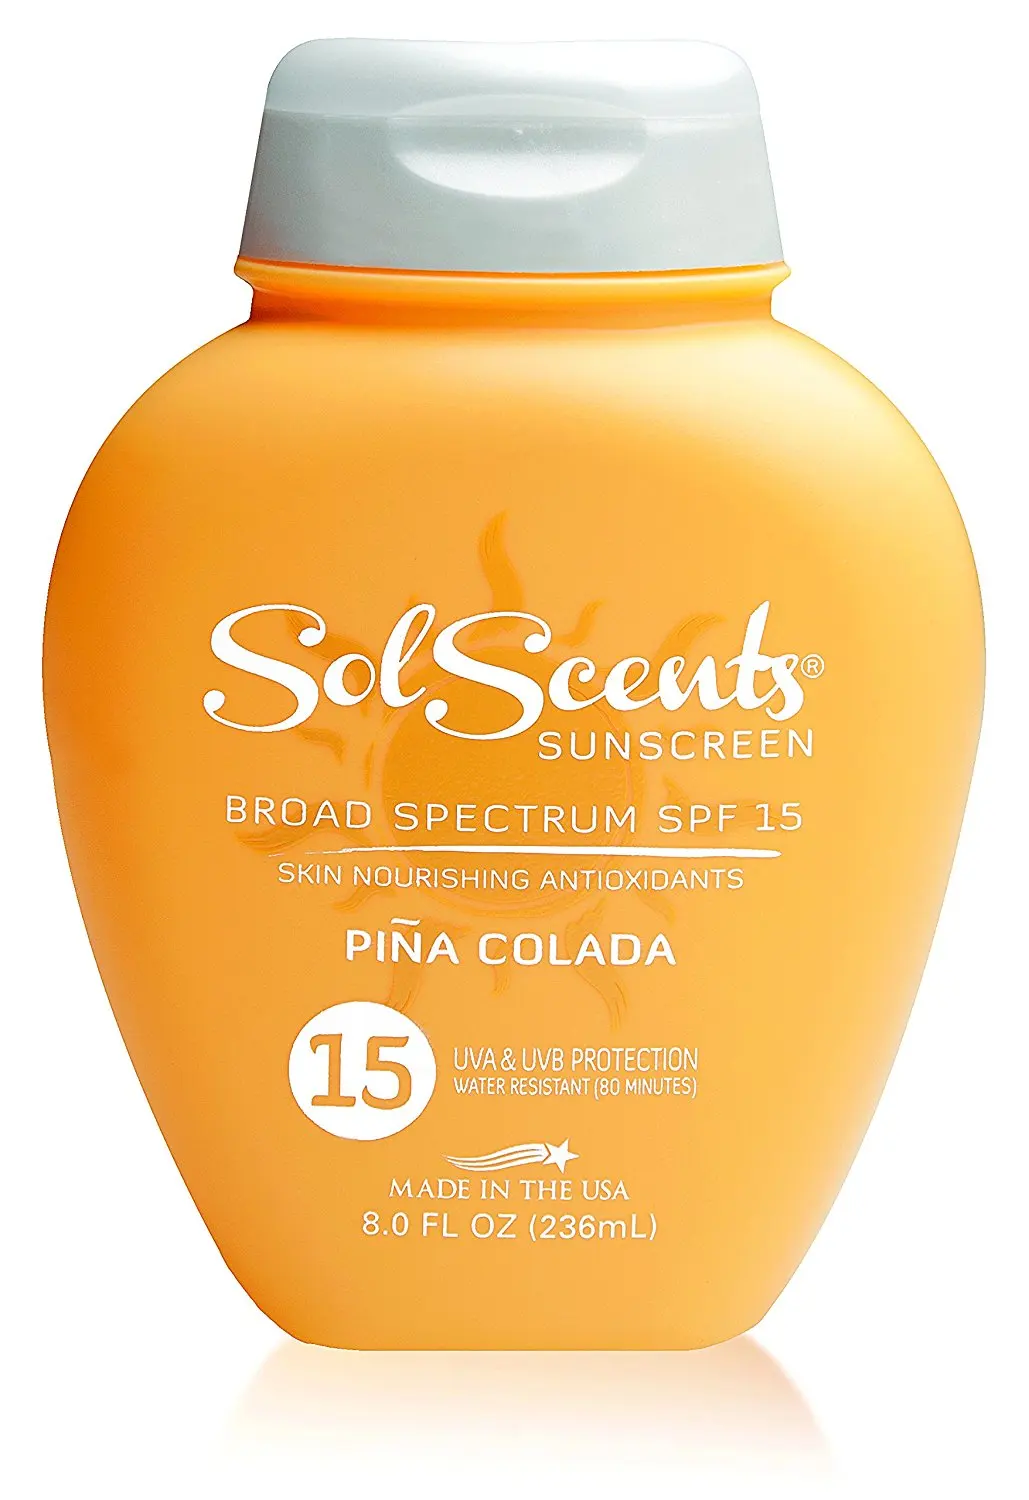 sunscreen for sensitive skin babies